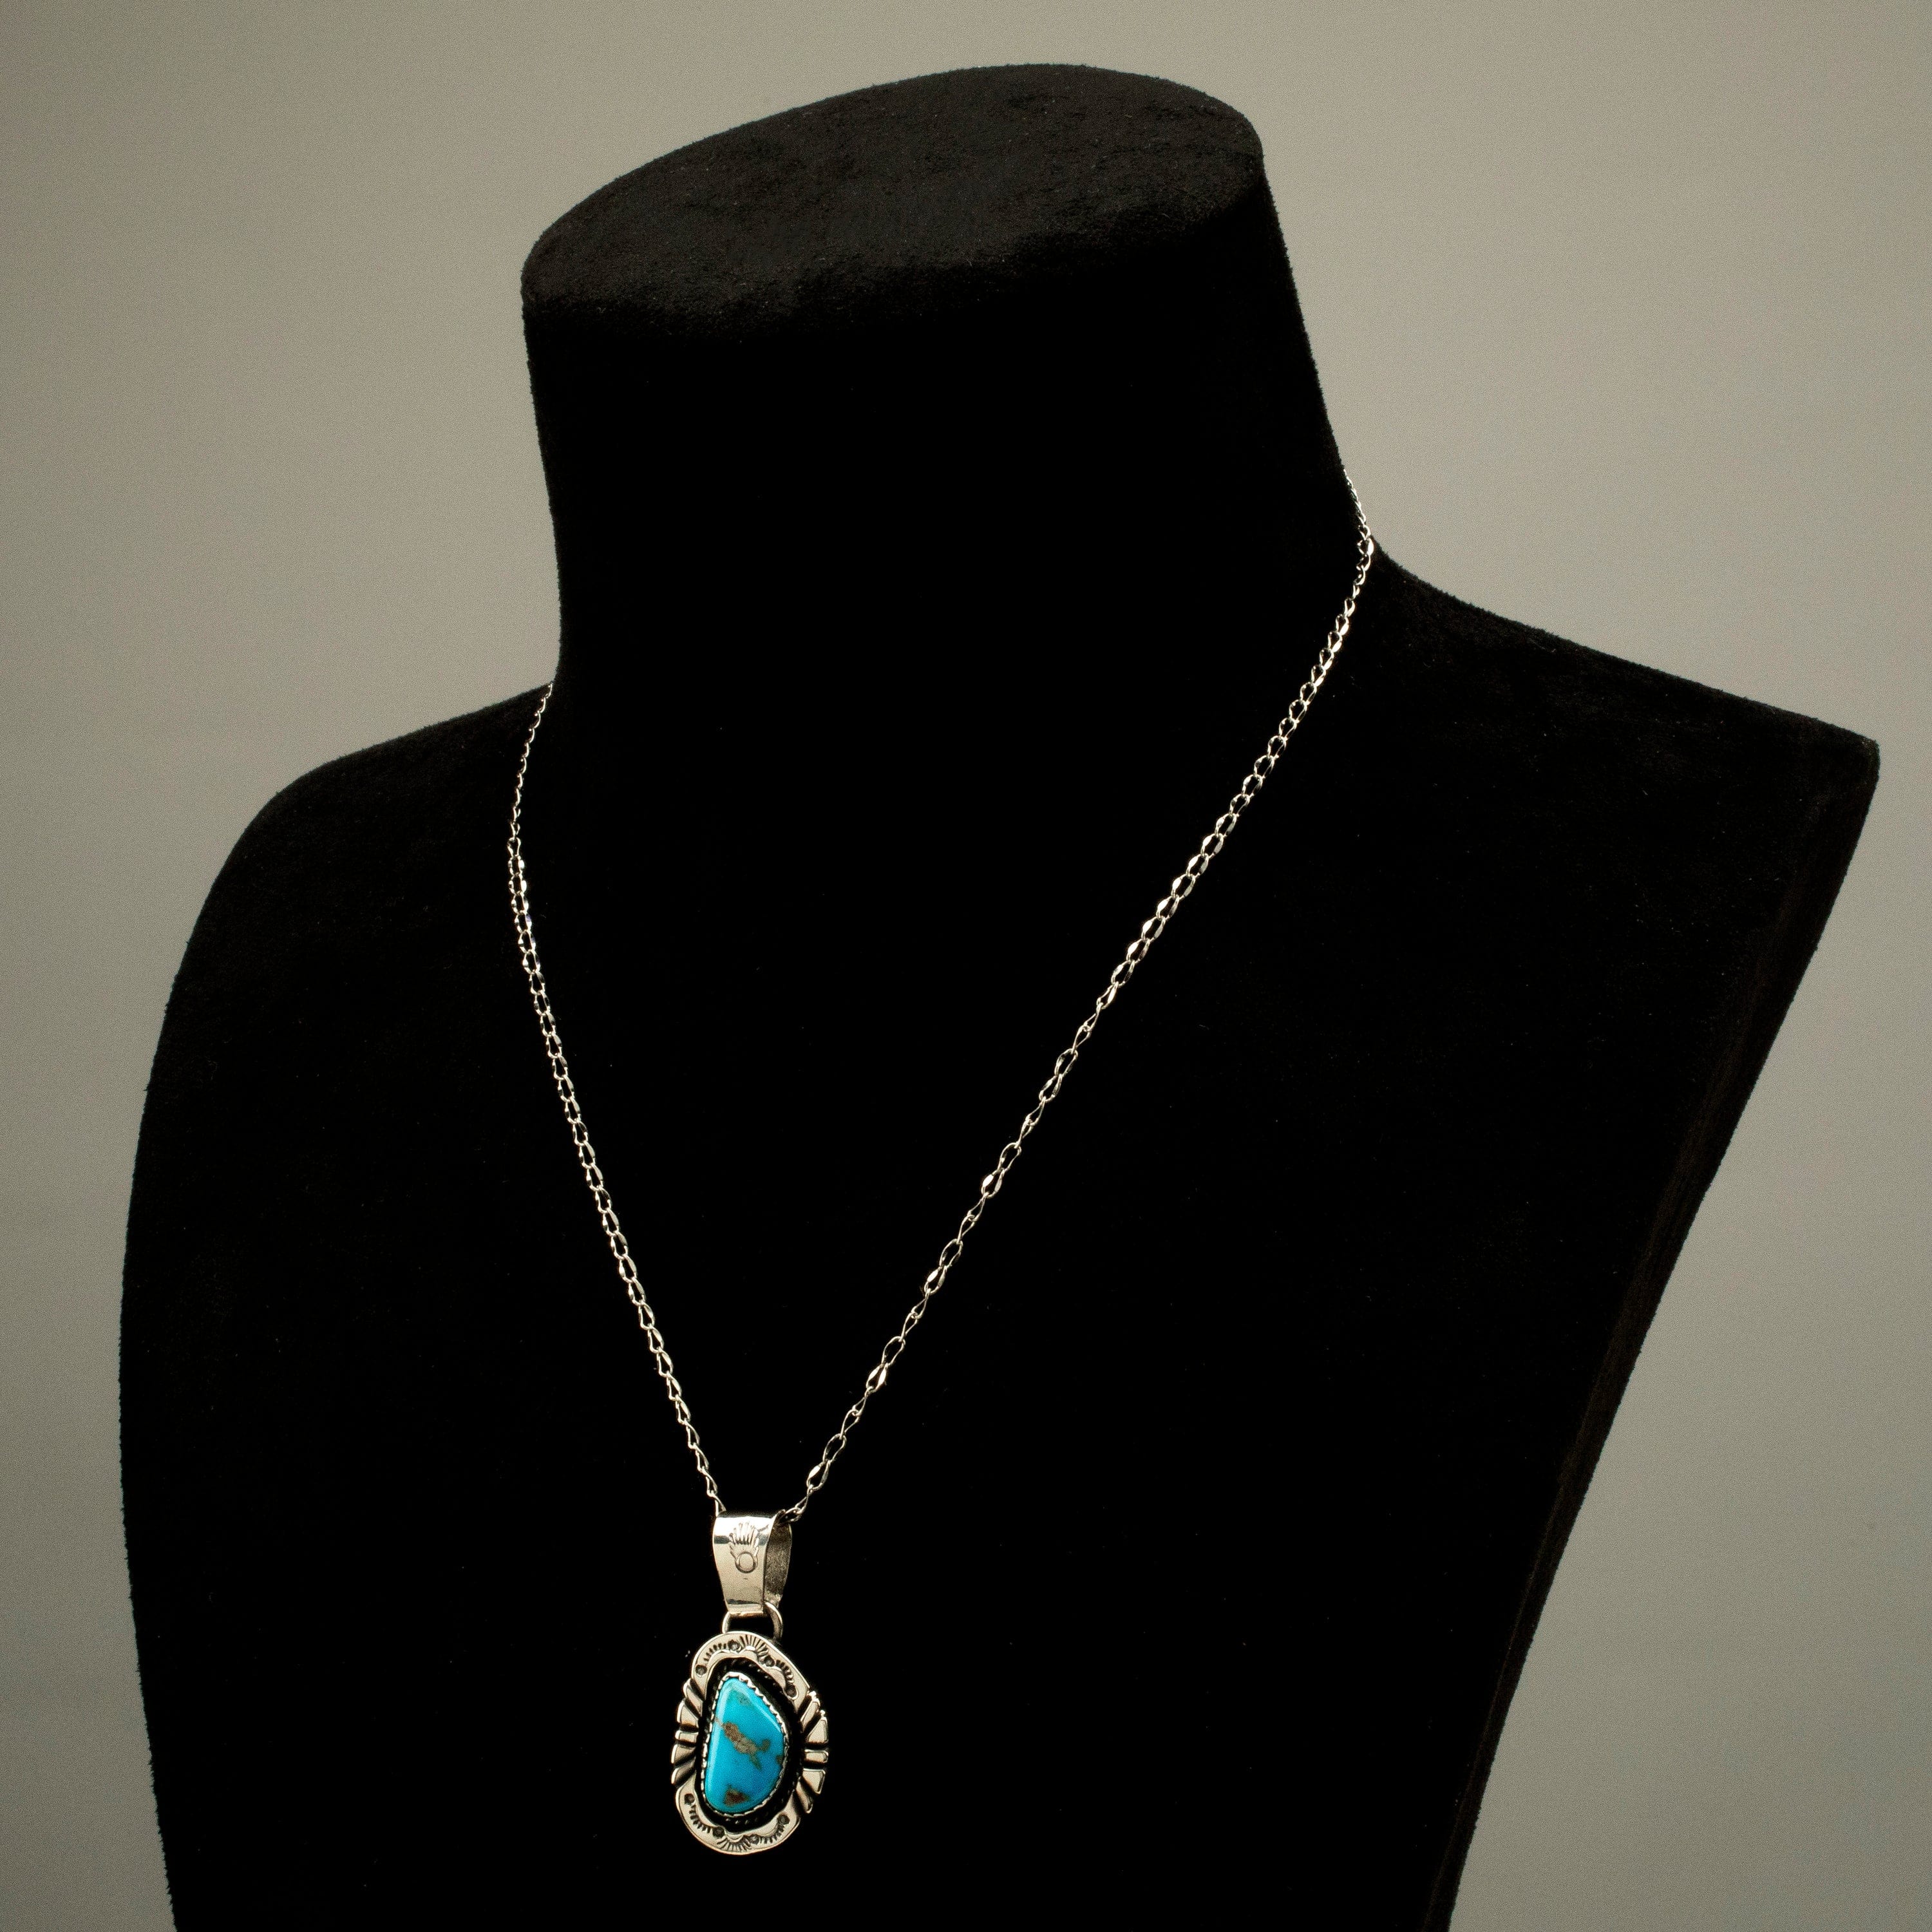 Kalifano Native American Jewelry Joe Piaso Jr. Navajo Sleeping Beauty Turquoise USA Native American Made 925 Sterling Silver Pendant NAN450.001